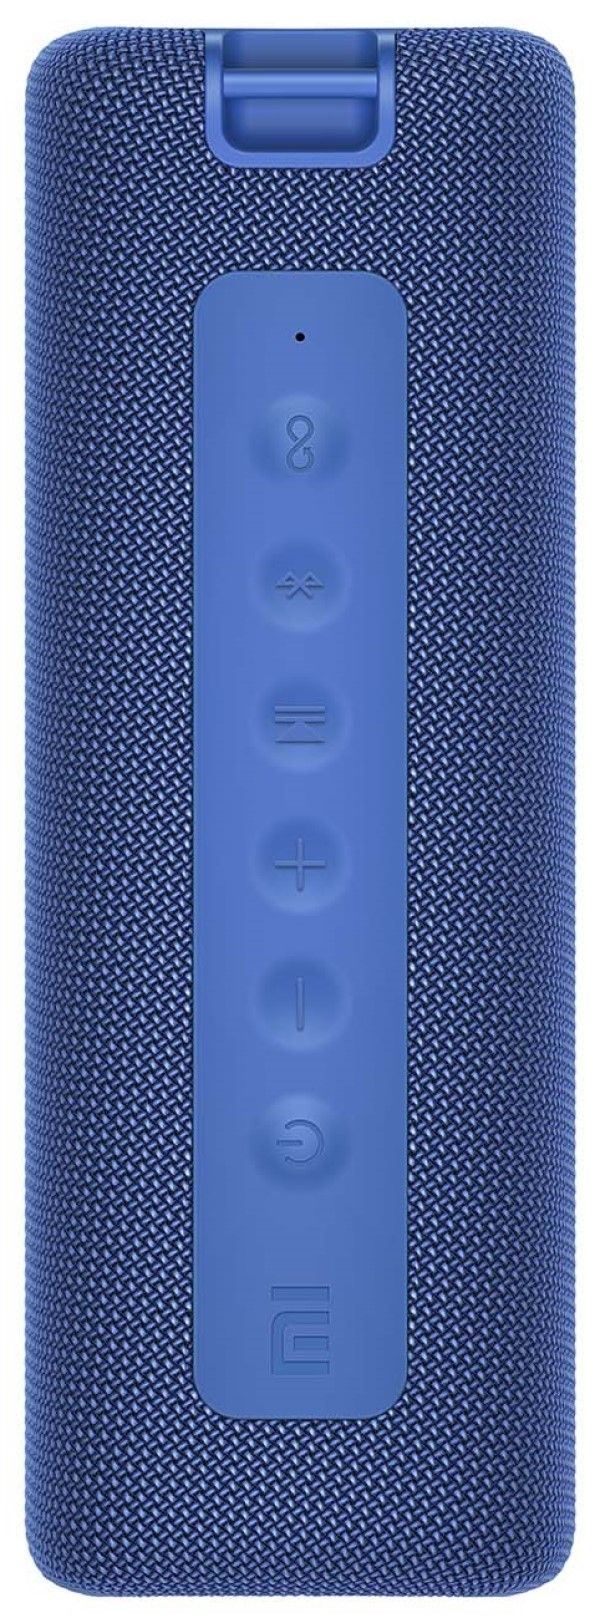 Портативная колонка Xiaomi Mi Portable Bluetooth Speaker синий